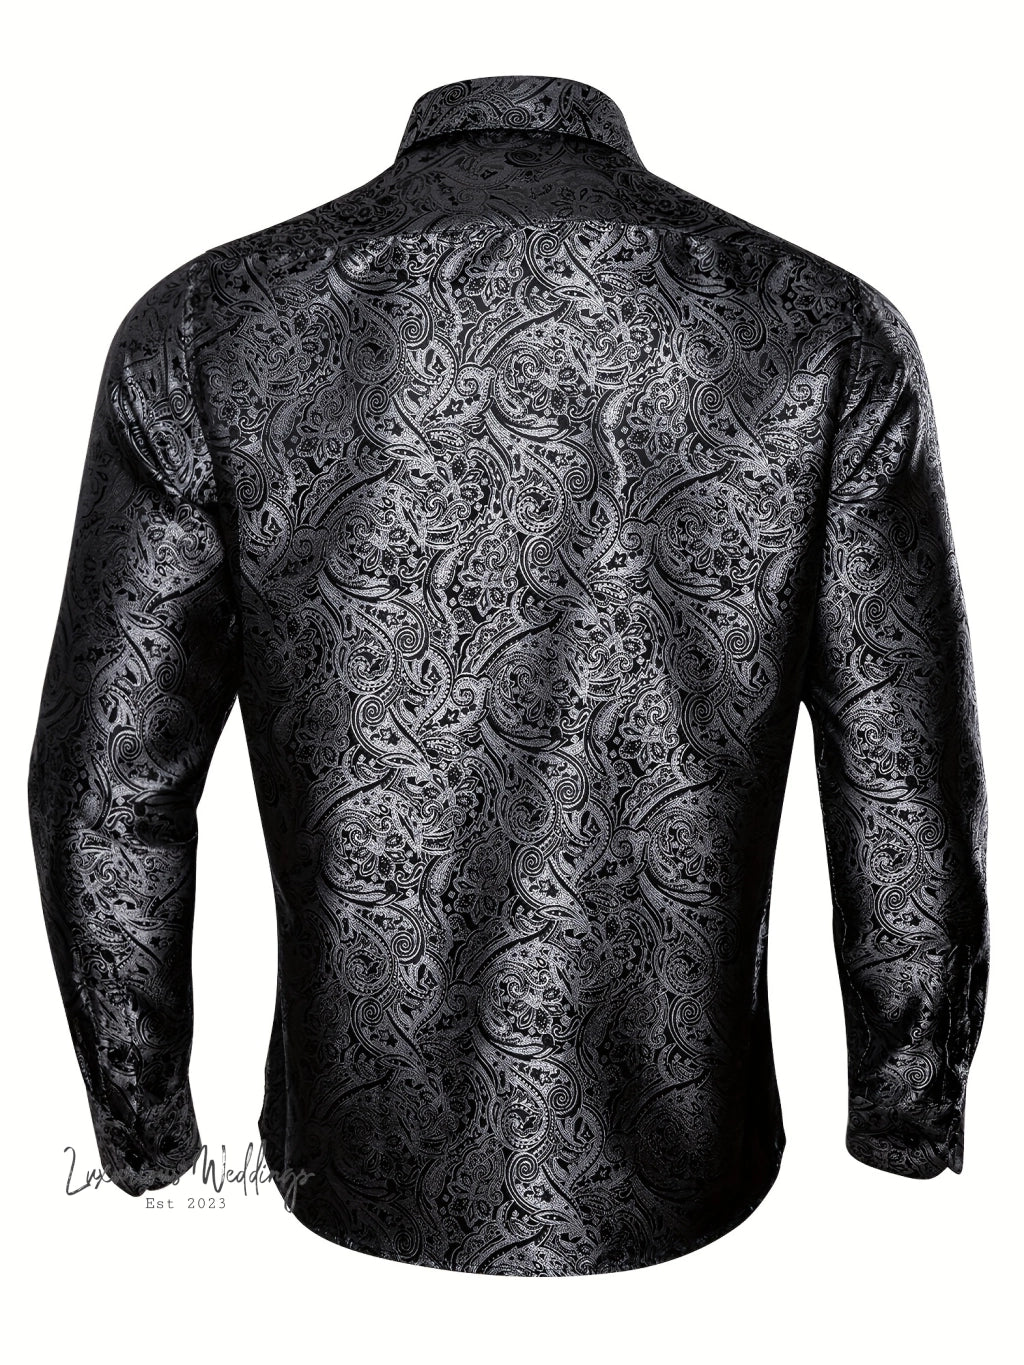 a black jacket with a pattern on it